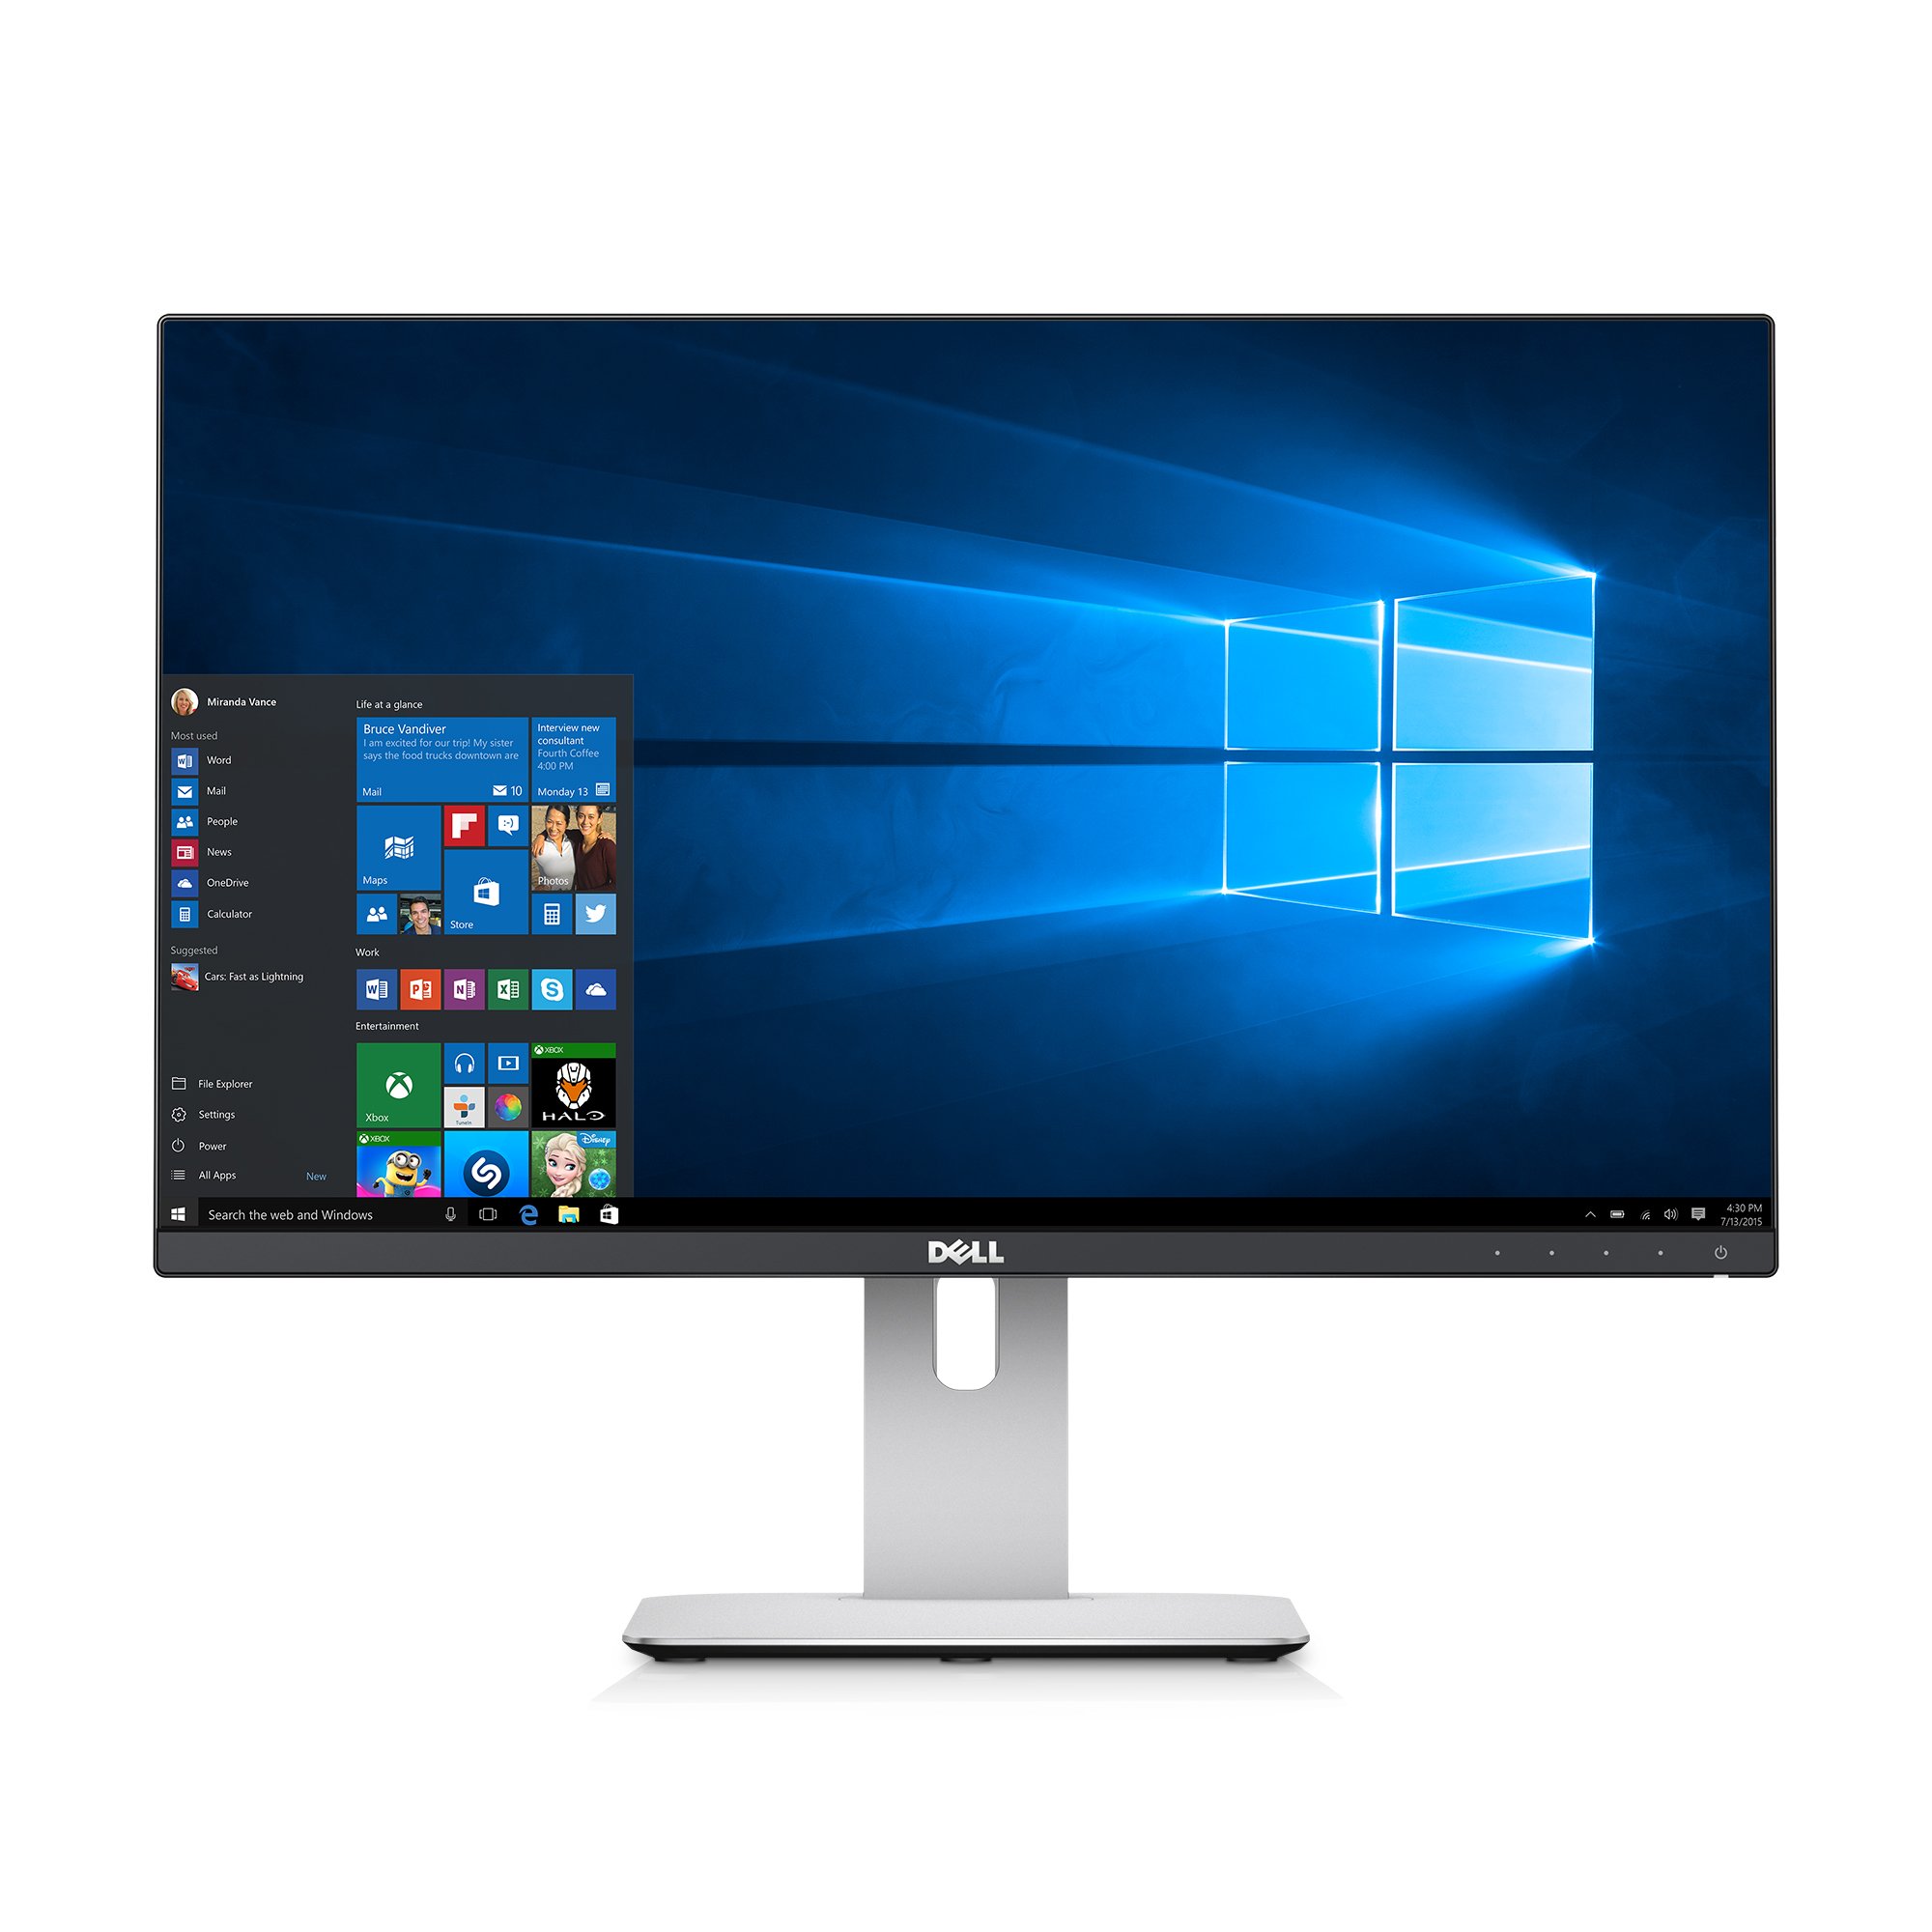 Dell UltraSharp U2414H 23.8” Inch Screen FHD 1080p LED Monitor